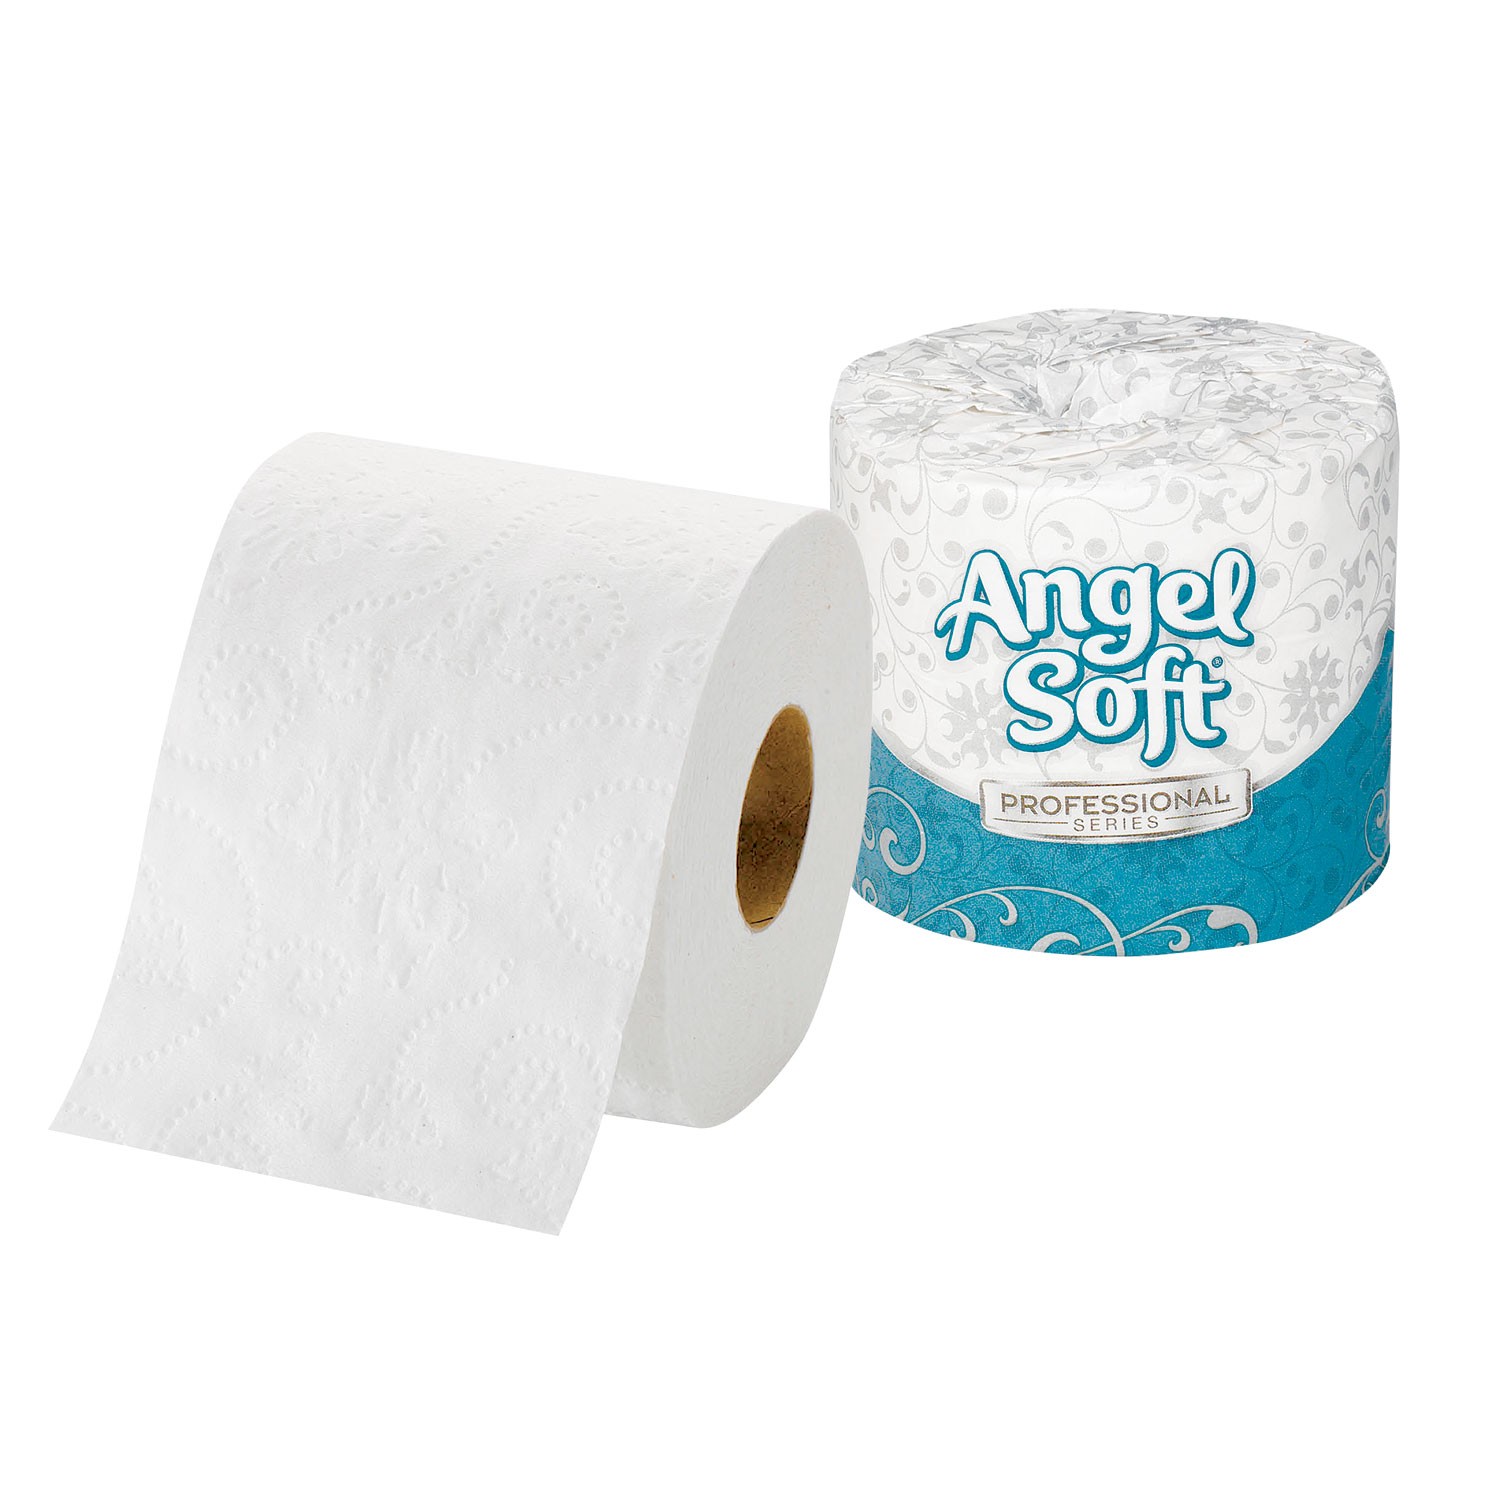  Georgia Pacific Professional 16880 Angel Soft ps Premium Bathroom Tissue, Septic Safe, 2-Ply, White, 450 Sheets/Roll, 80 Rolls/Carton (GPC16880) 